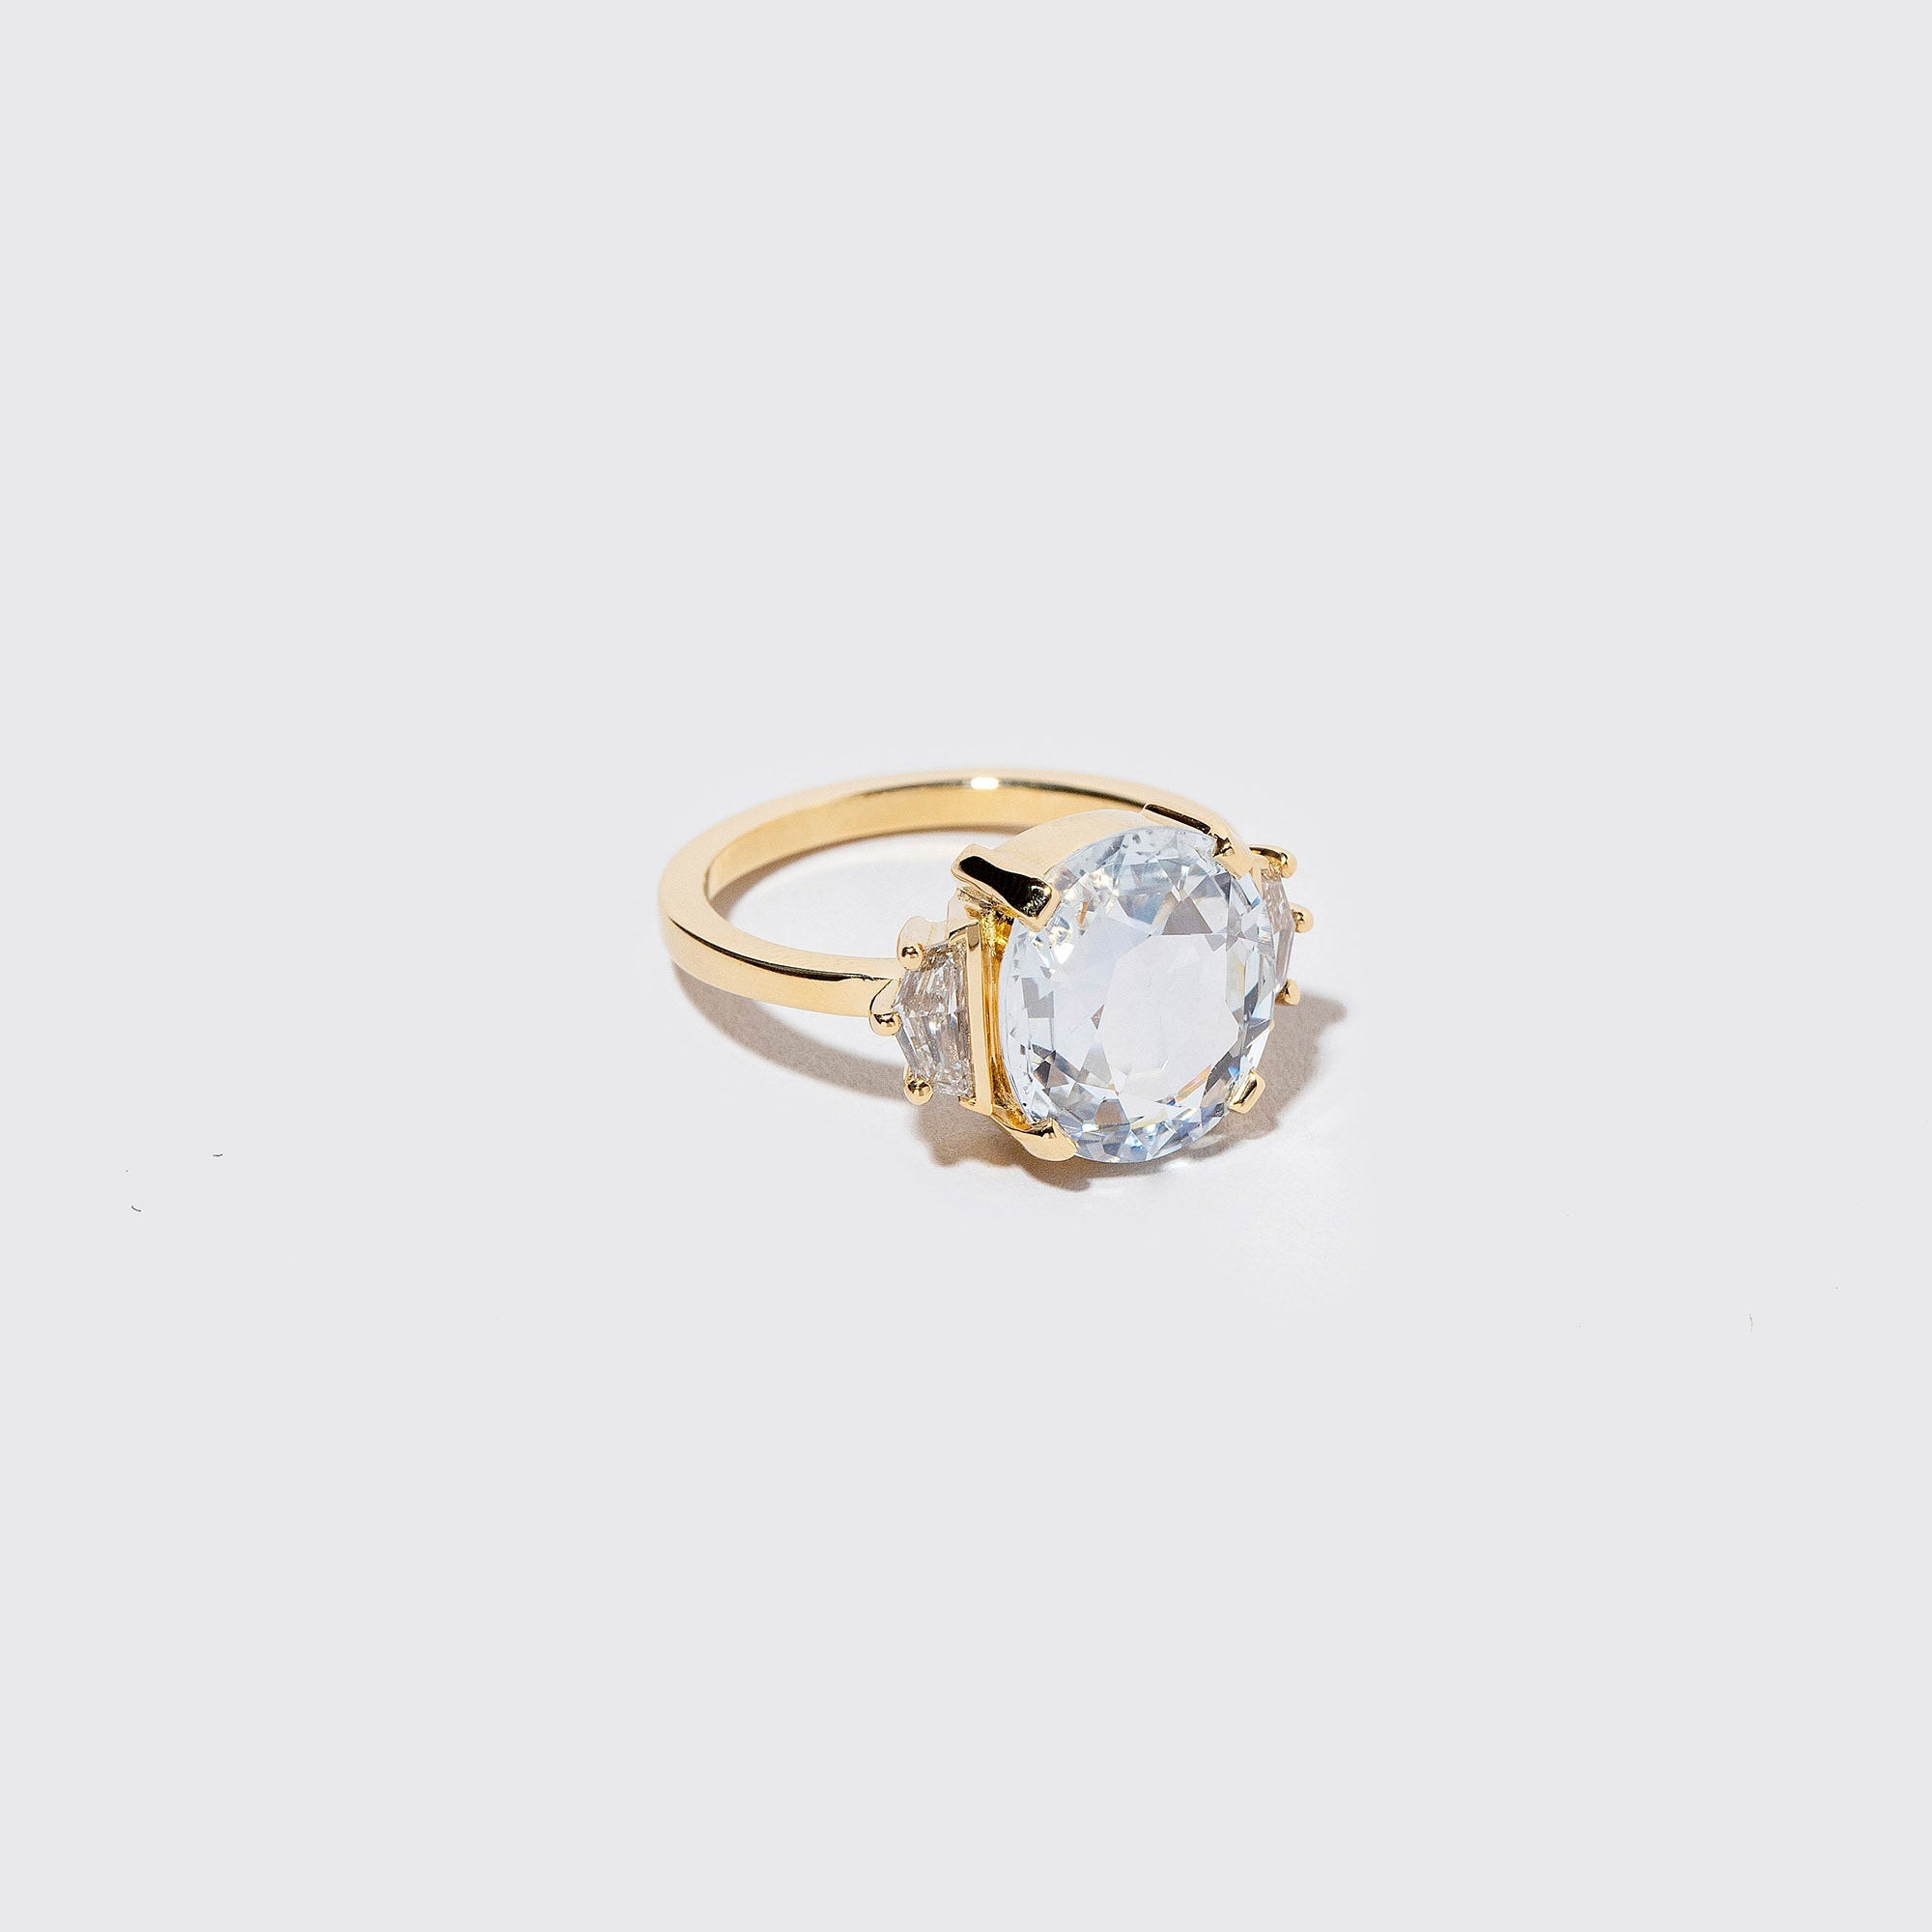 product_details:: Argent Ring on light color background.